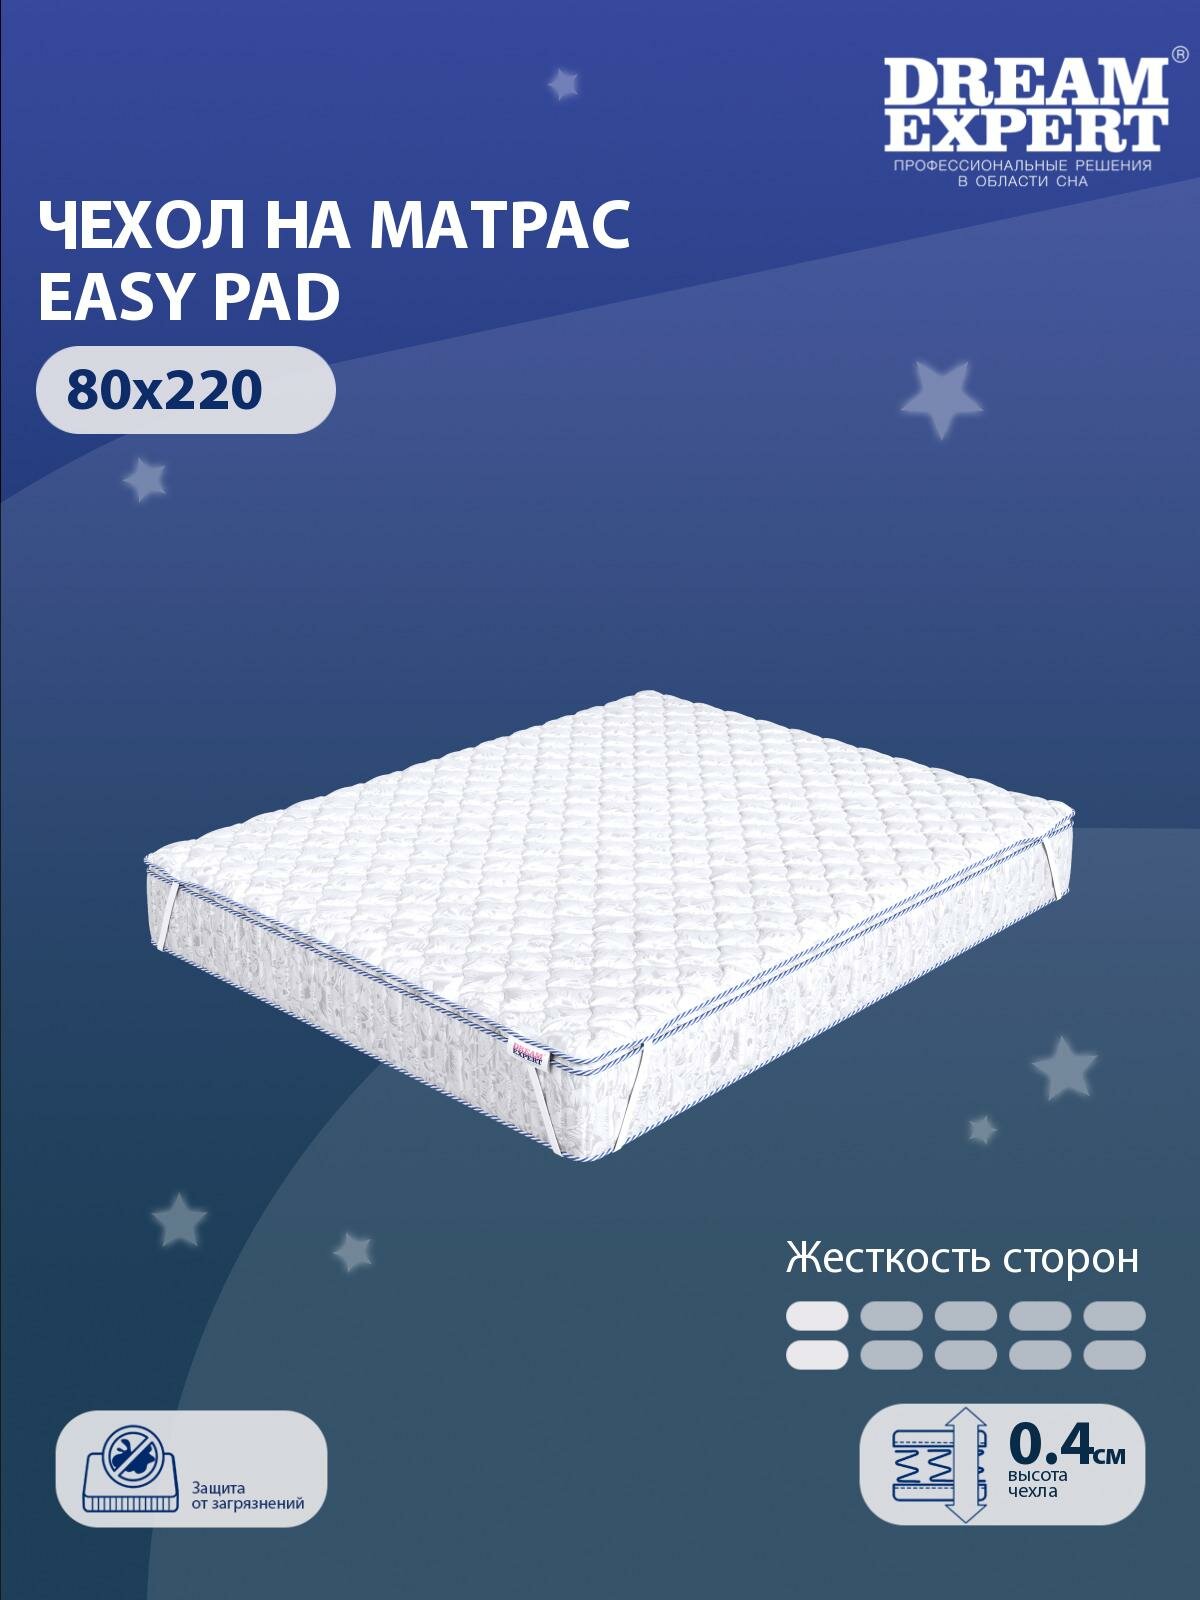 Чехол для матраса защитный, стеганый DreamExpert Easy pad 80x220 на резинках по углам, на высоту матраса до 25 см, защитный чехол на матрас, Наматрасник-чехол, белый